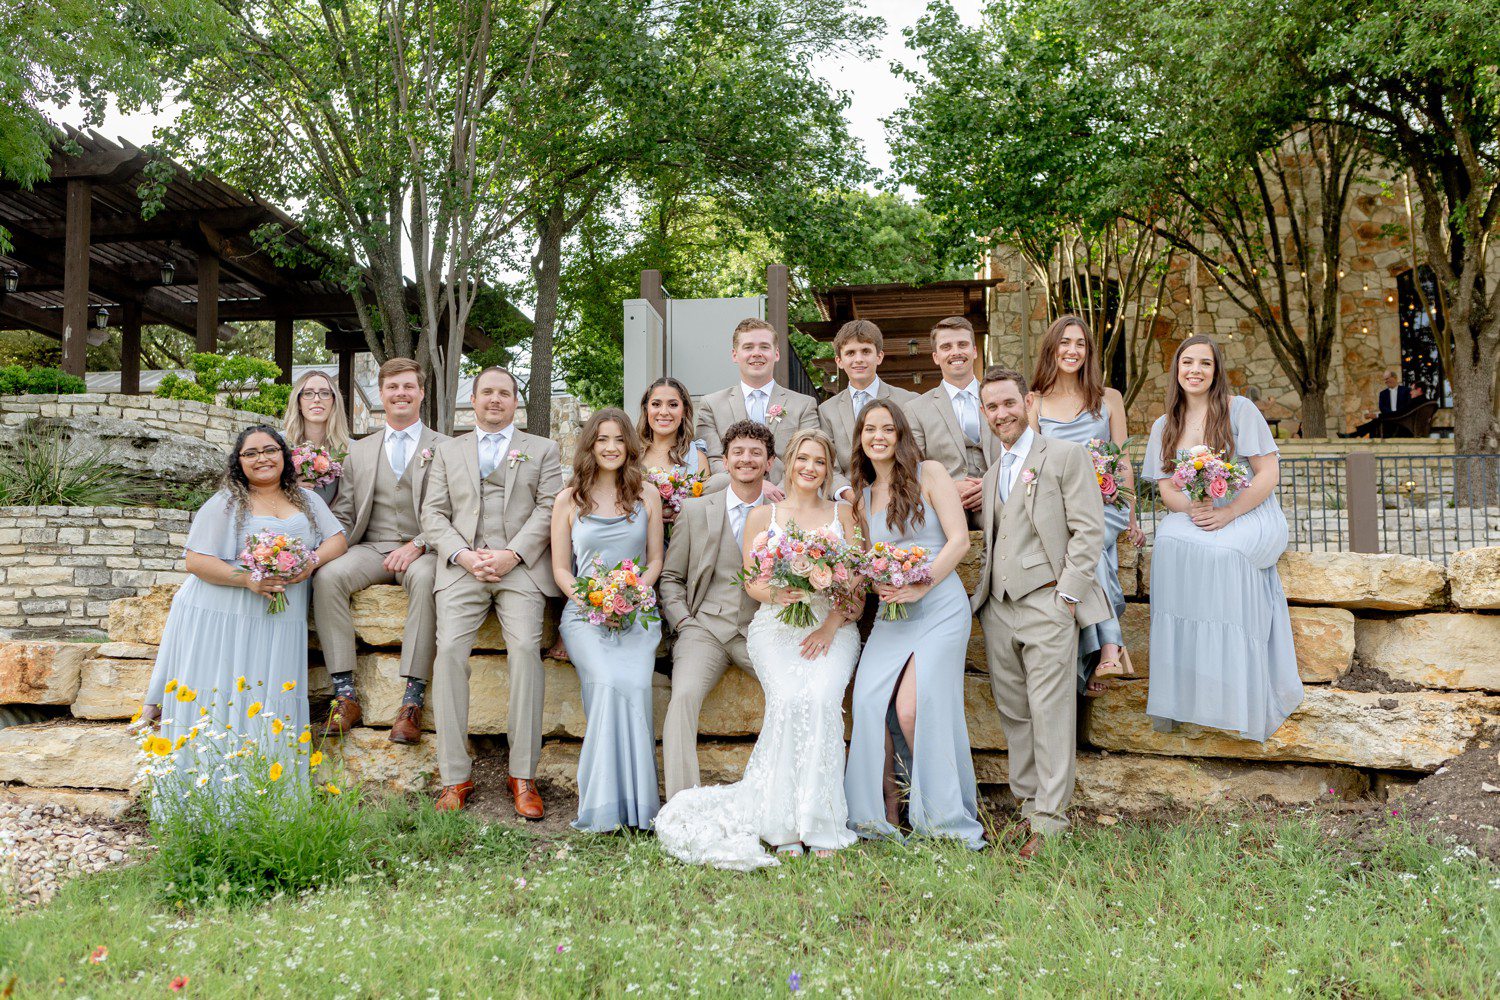 Wedding Party photos at Sendera Springs in Kerrville, TX.